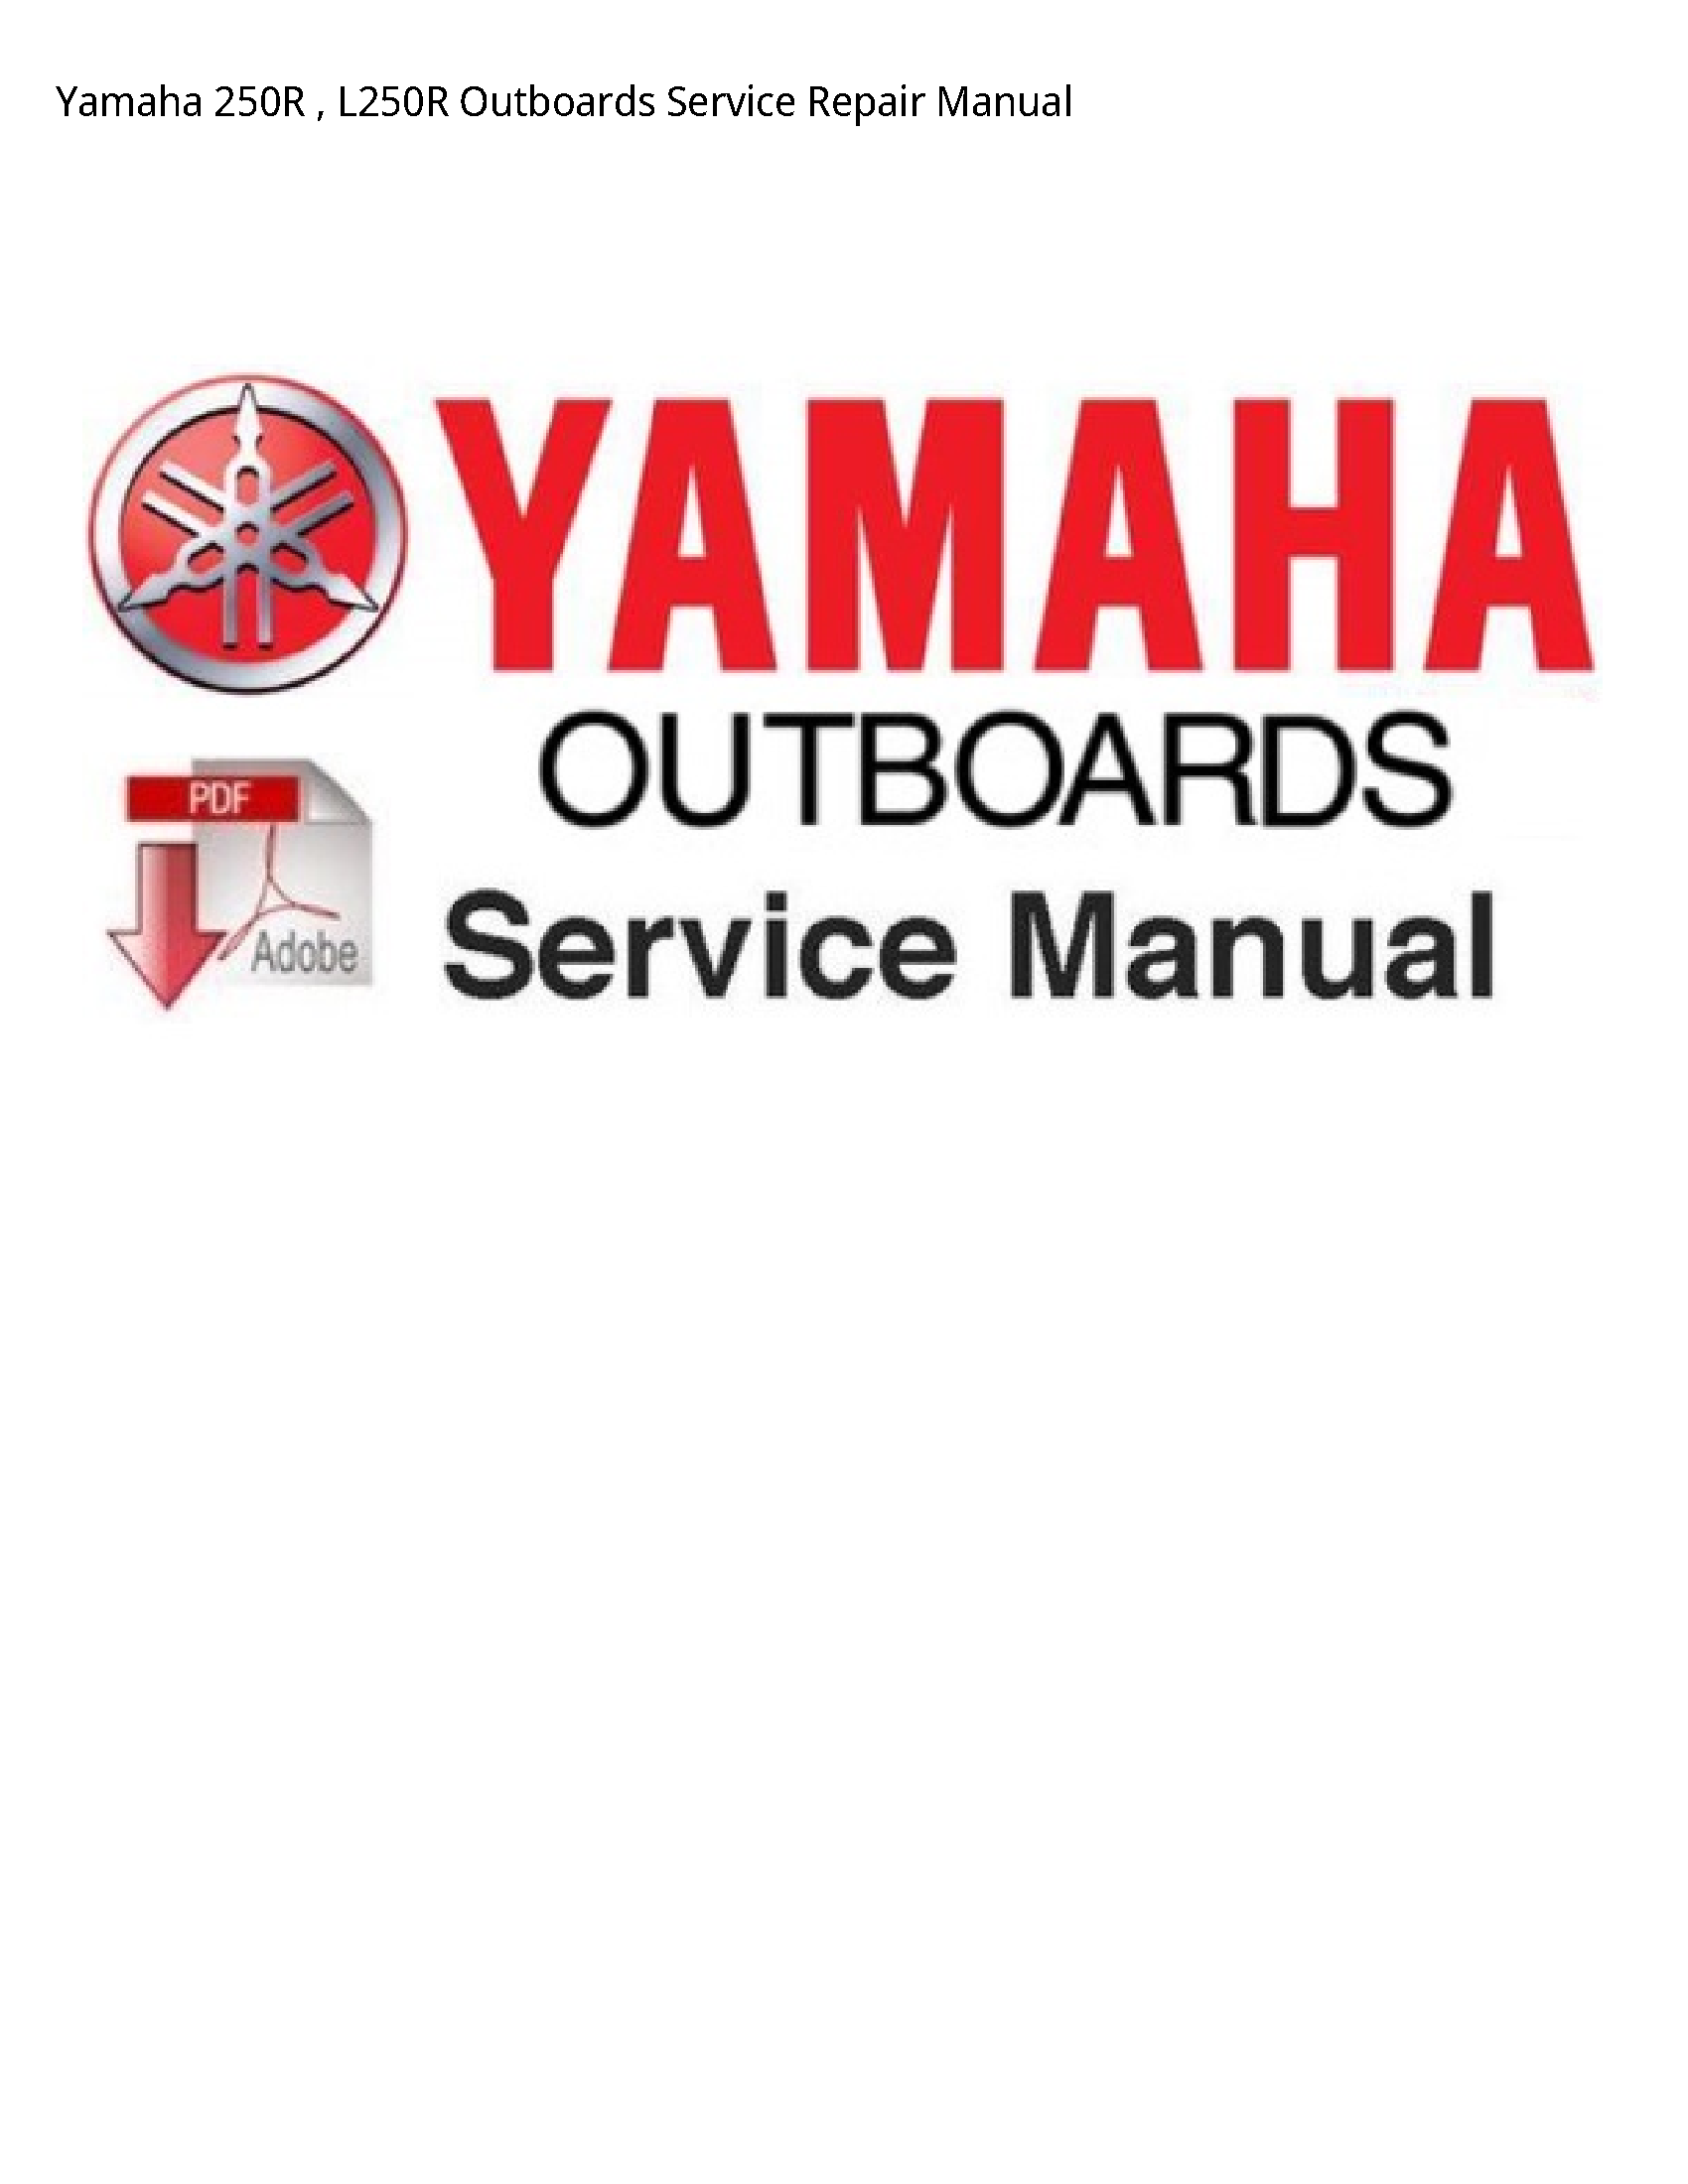 Yamaha 250R Outboards manual